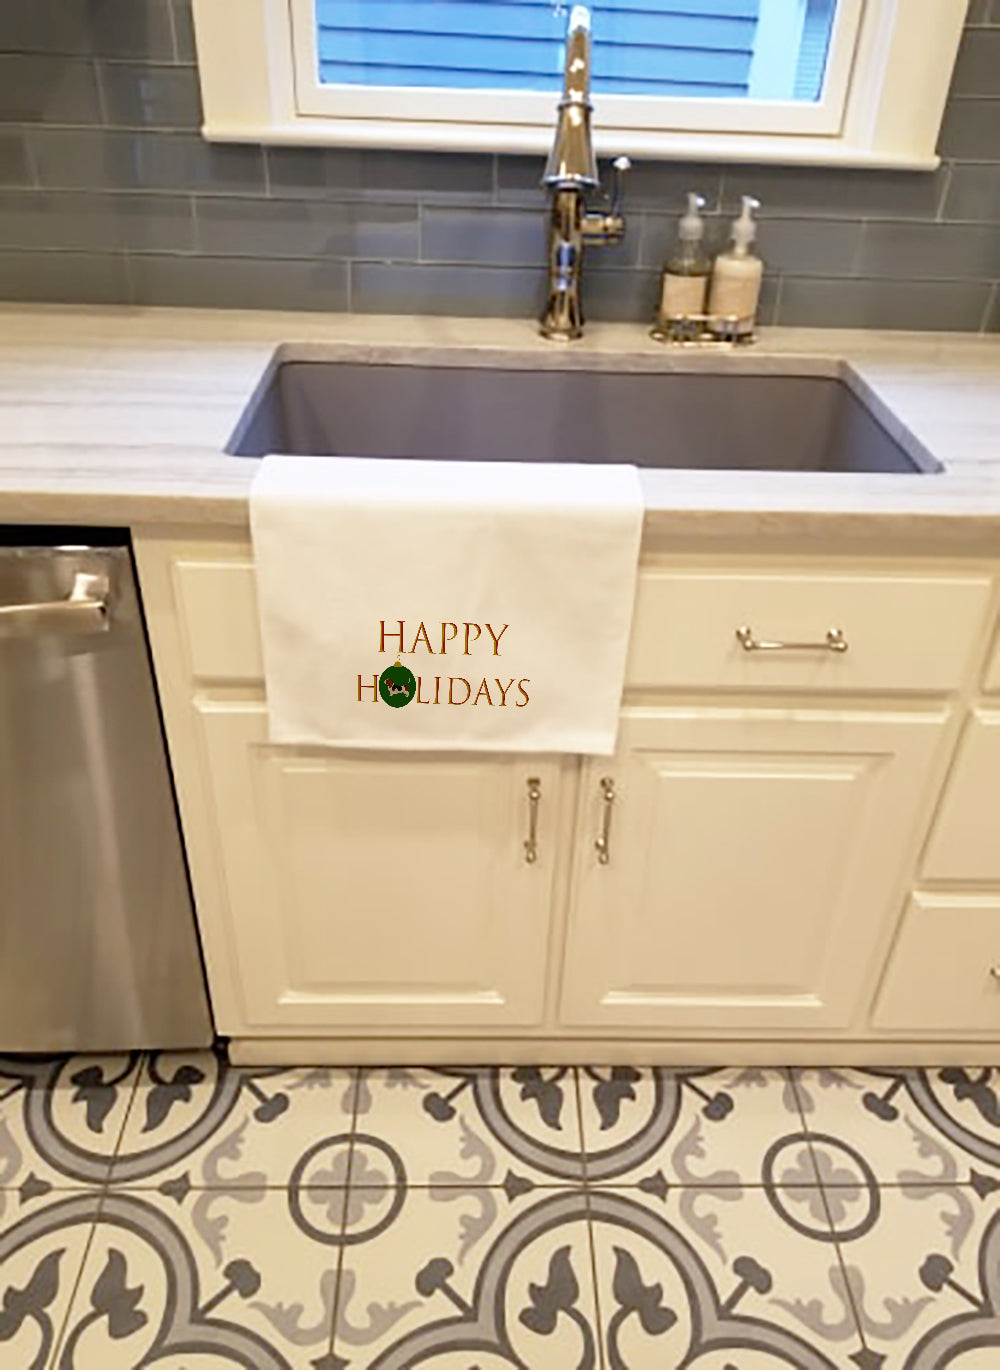 Buy this Basset Hound Happy Holidays White Kitchen Towel Set of 2